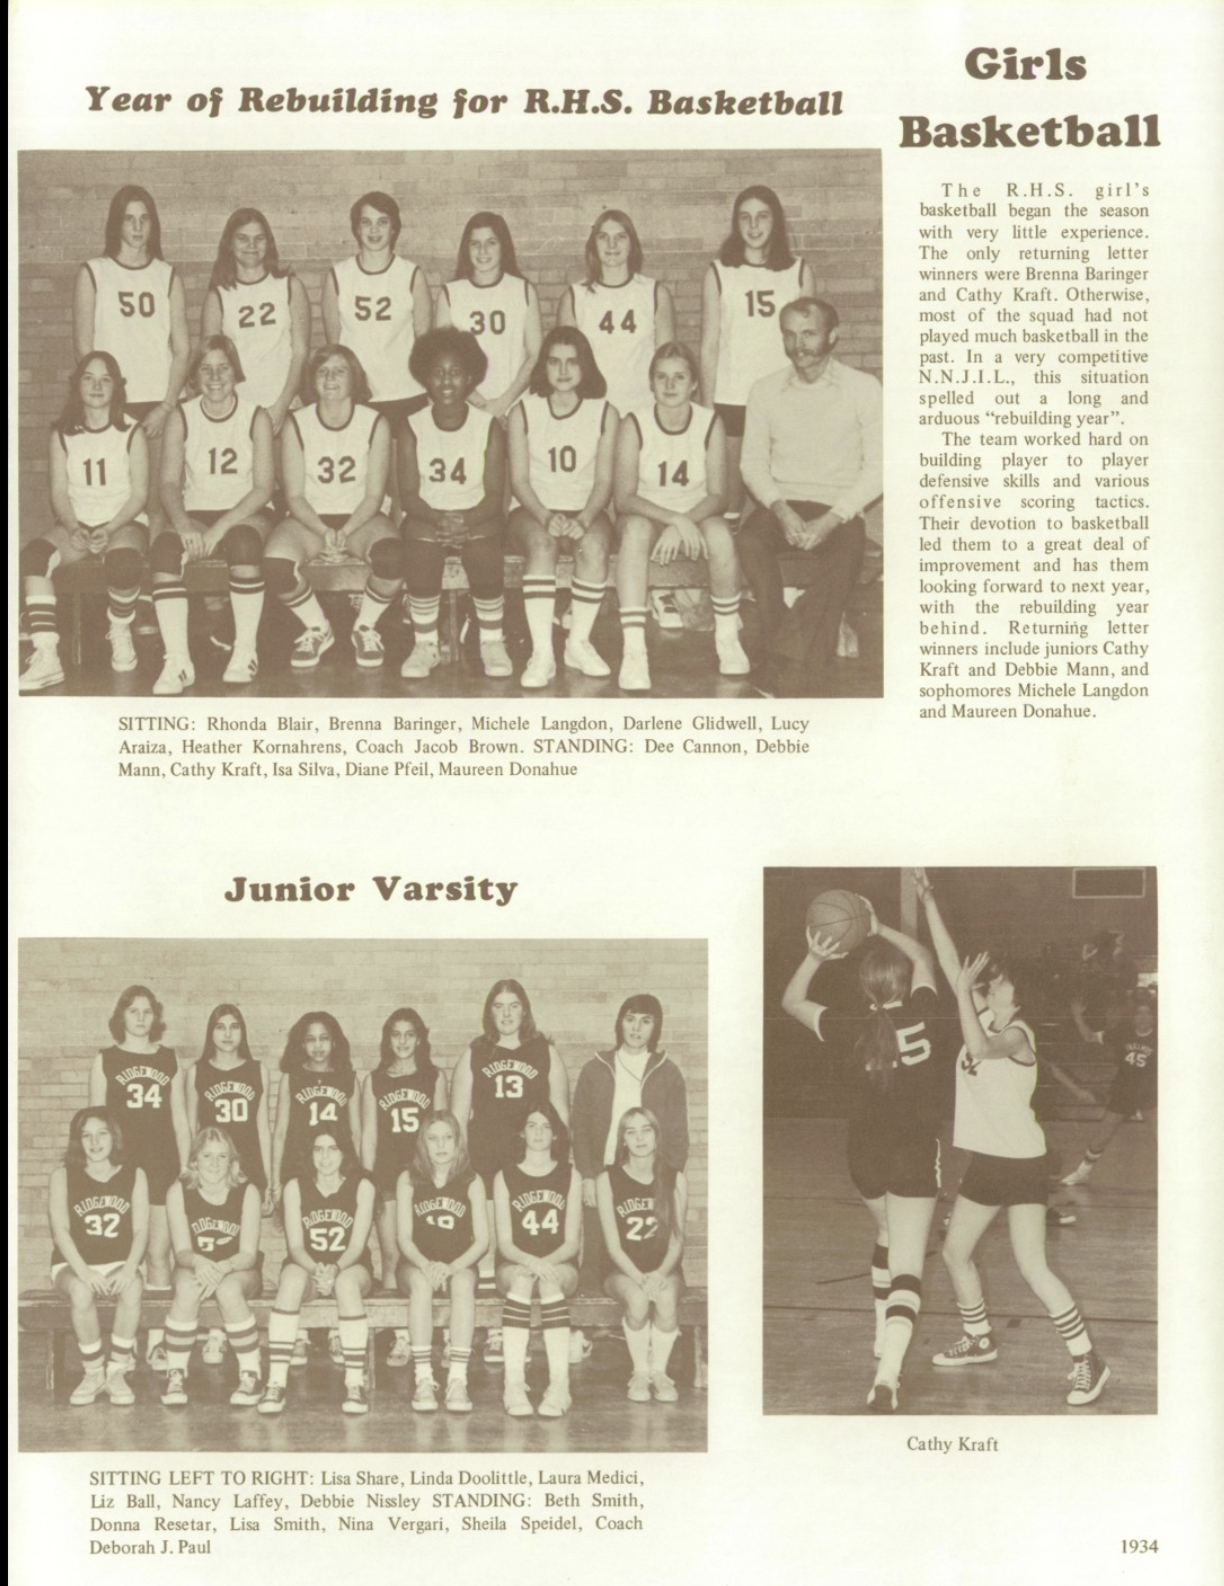 1976 Girls’ Basketball Team